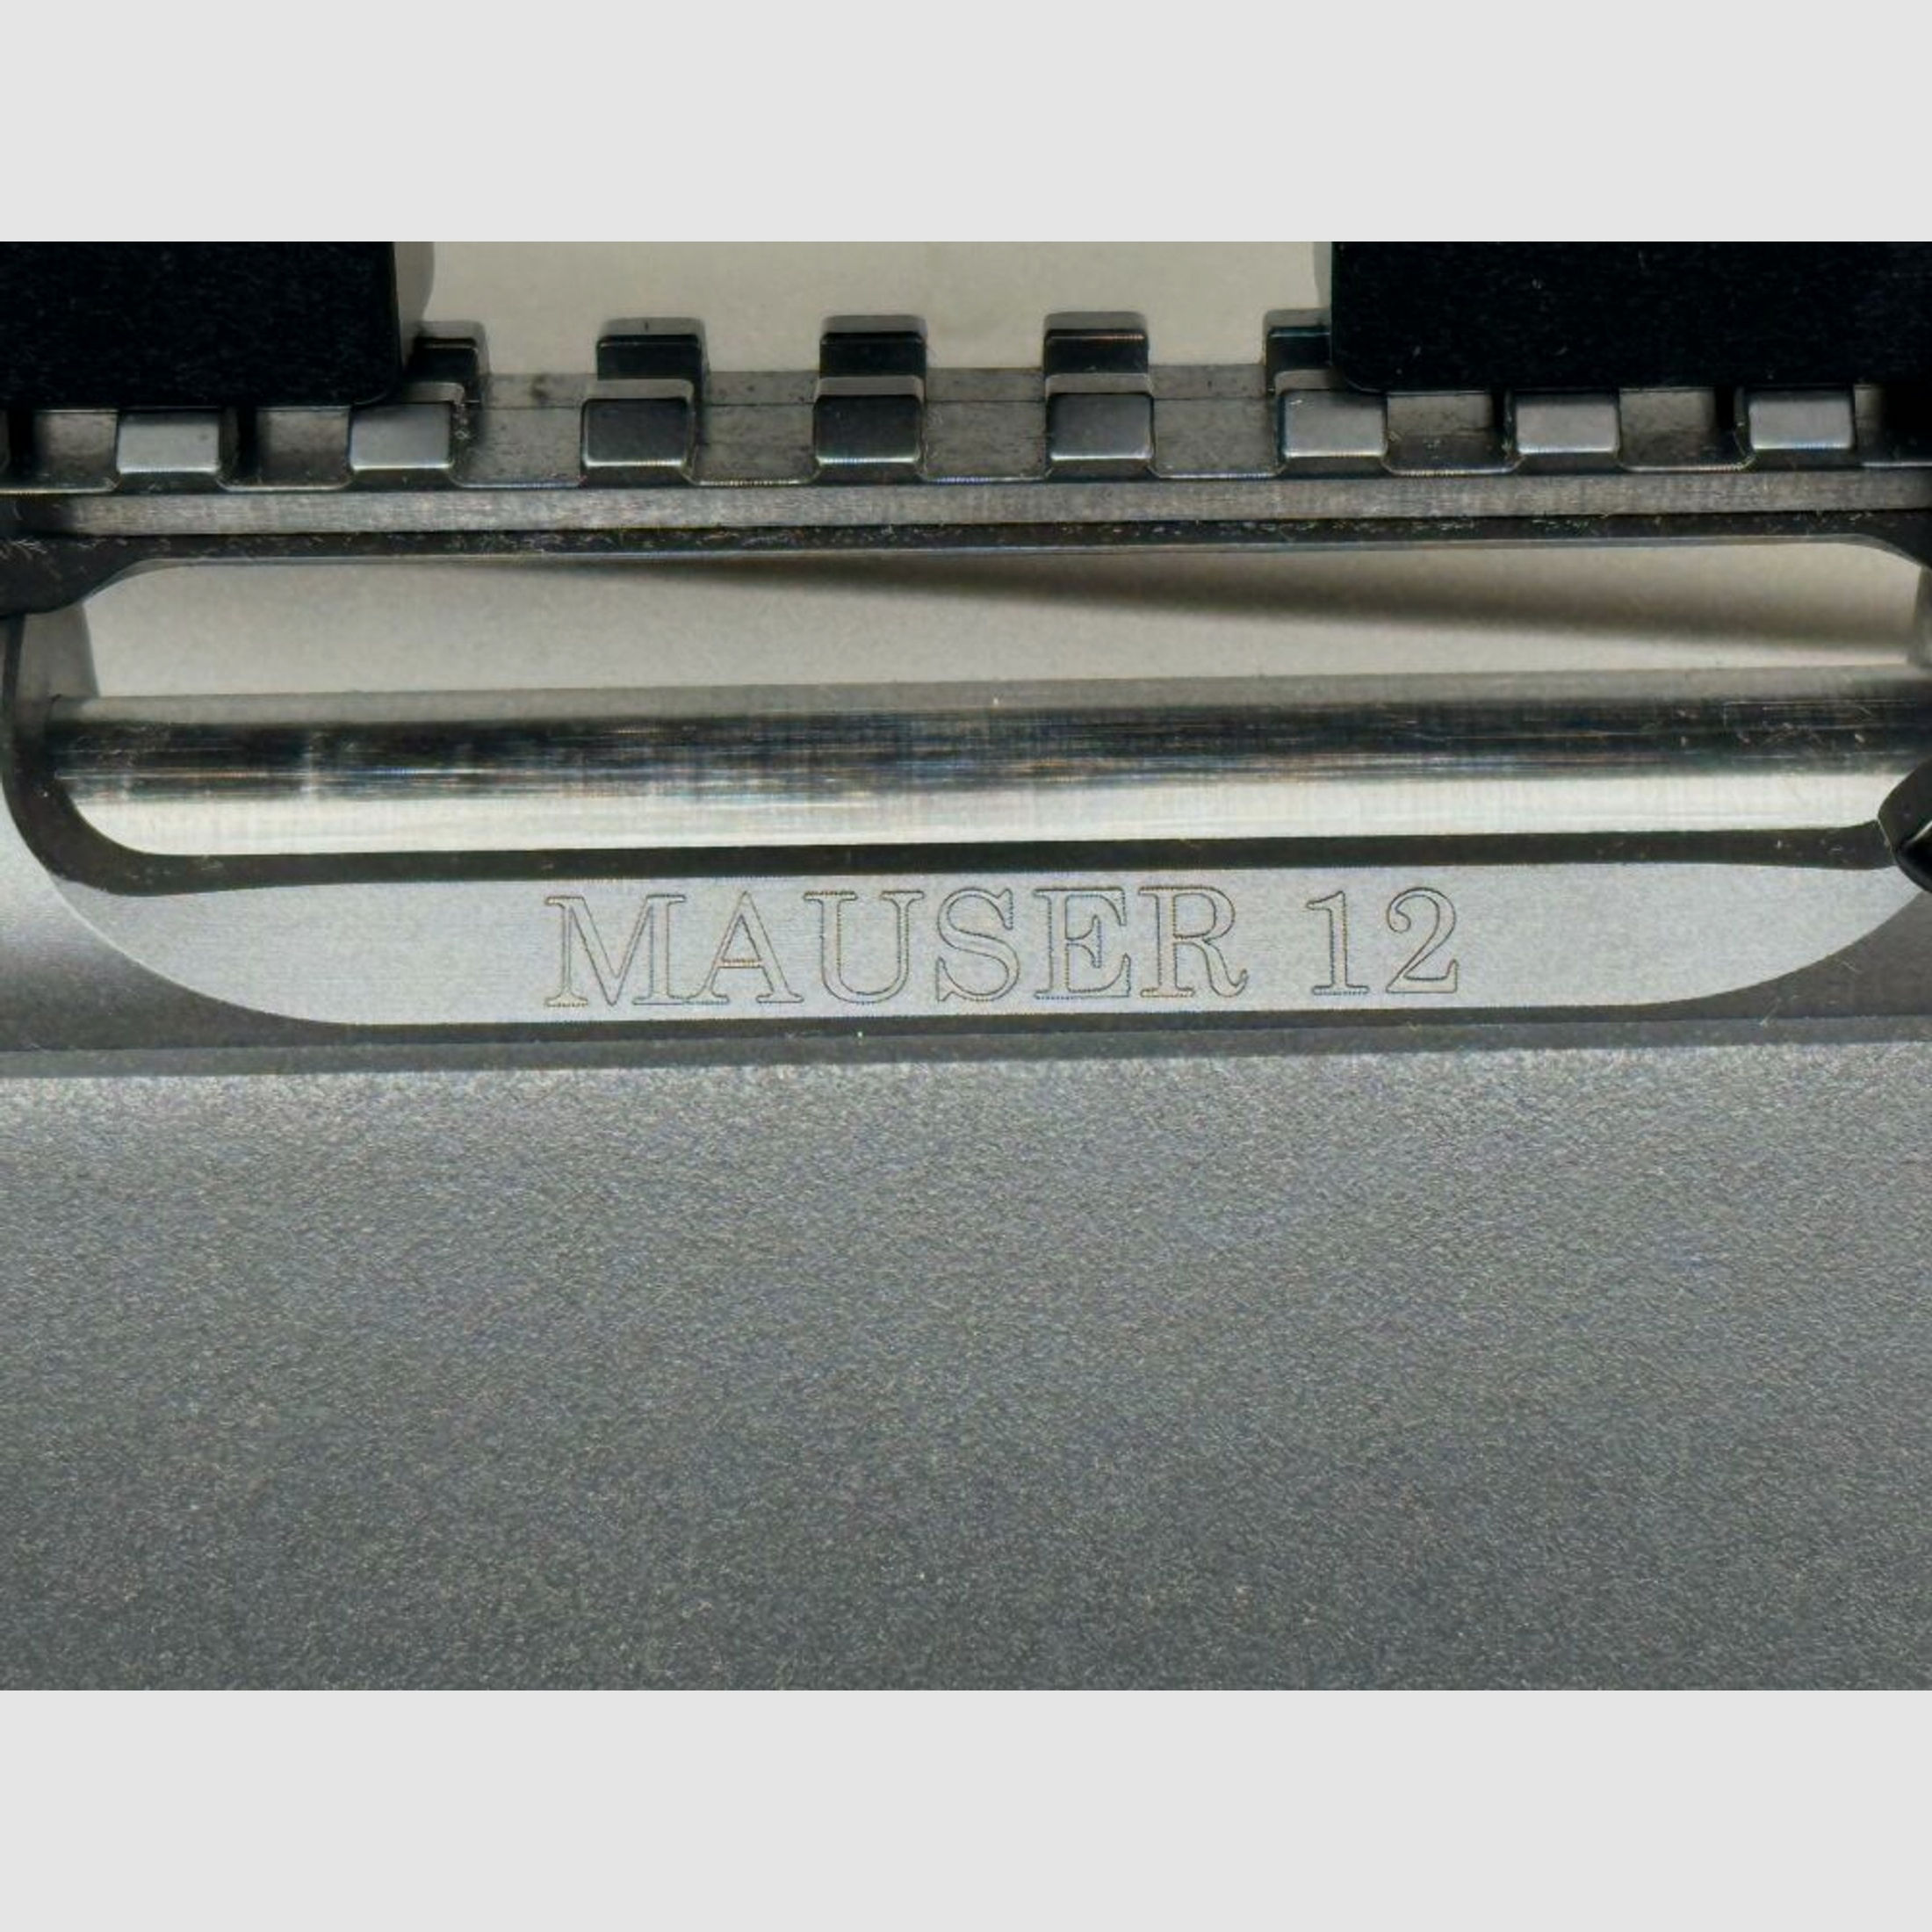 MAUSER	 M12 Grey Max - Komplettset Jungjäger - Waffen Friedrichs